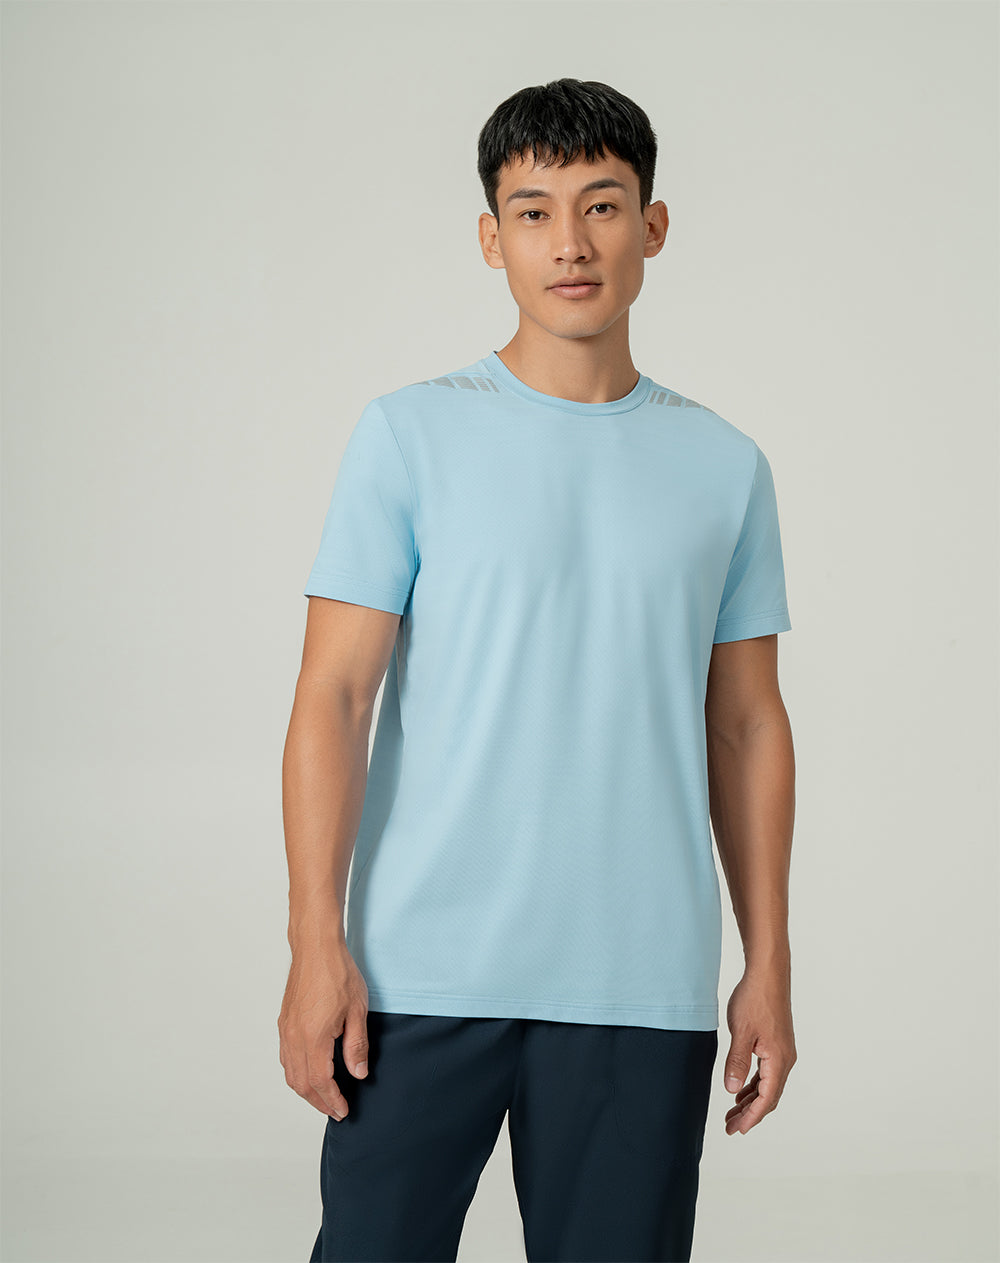 Camiseta regular fit manga corta azul